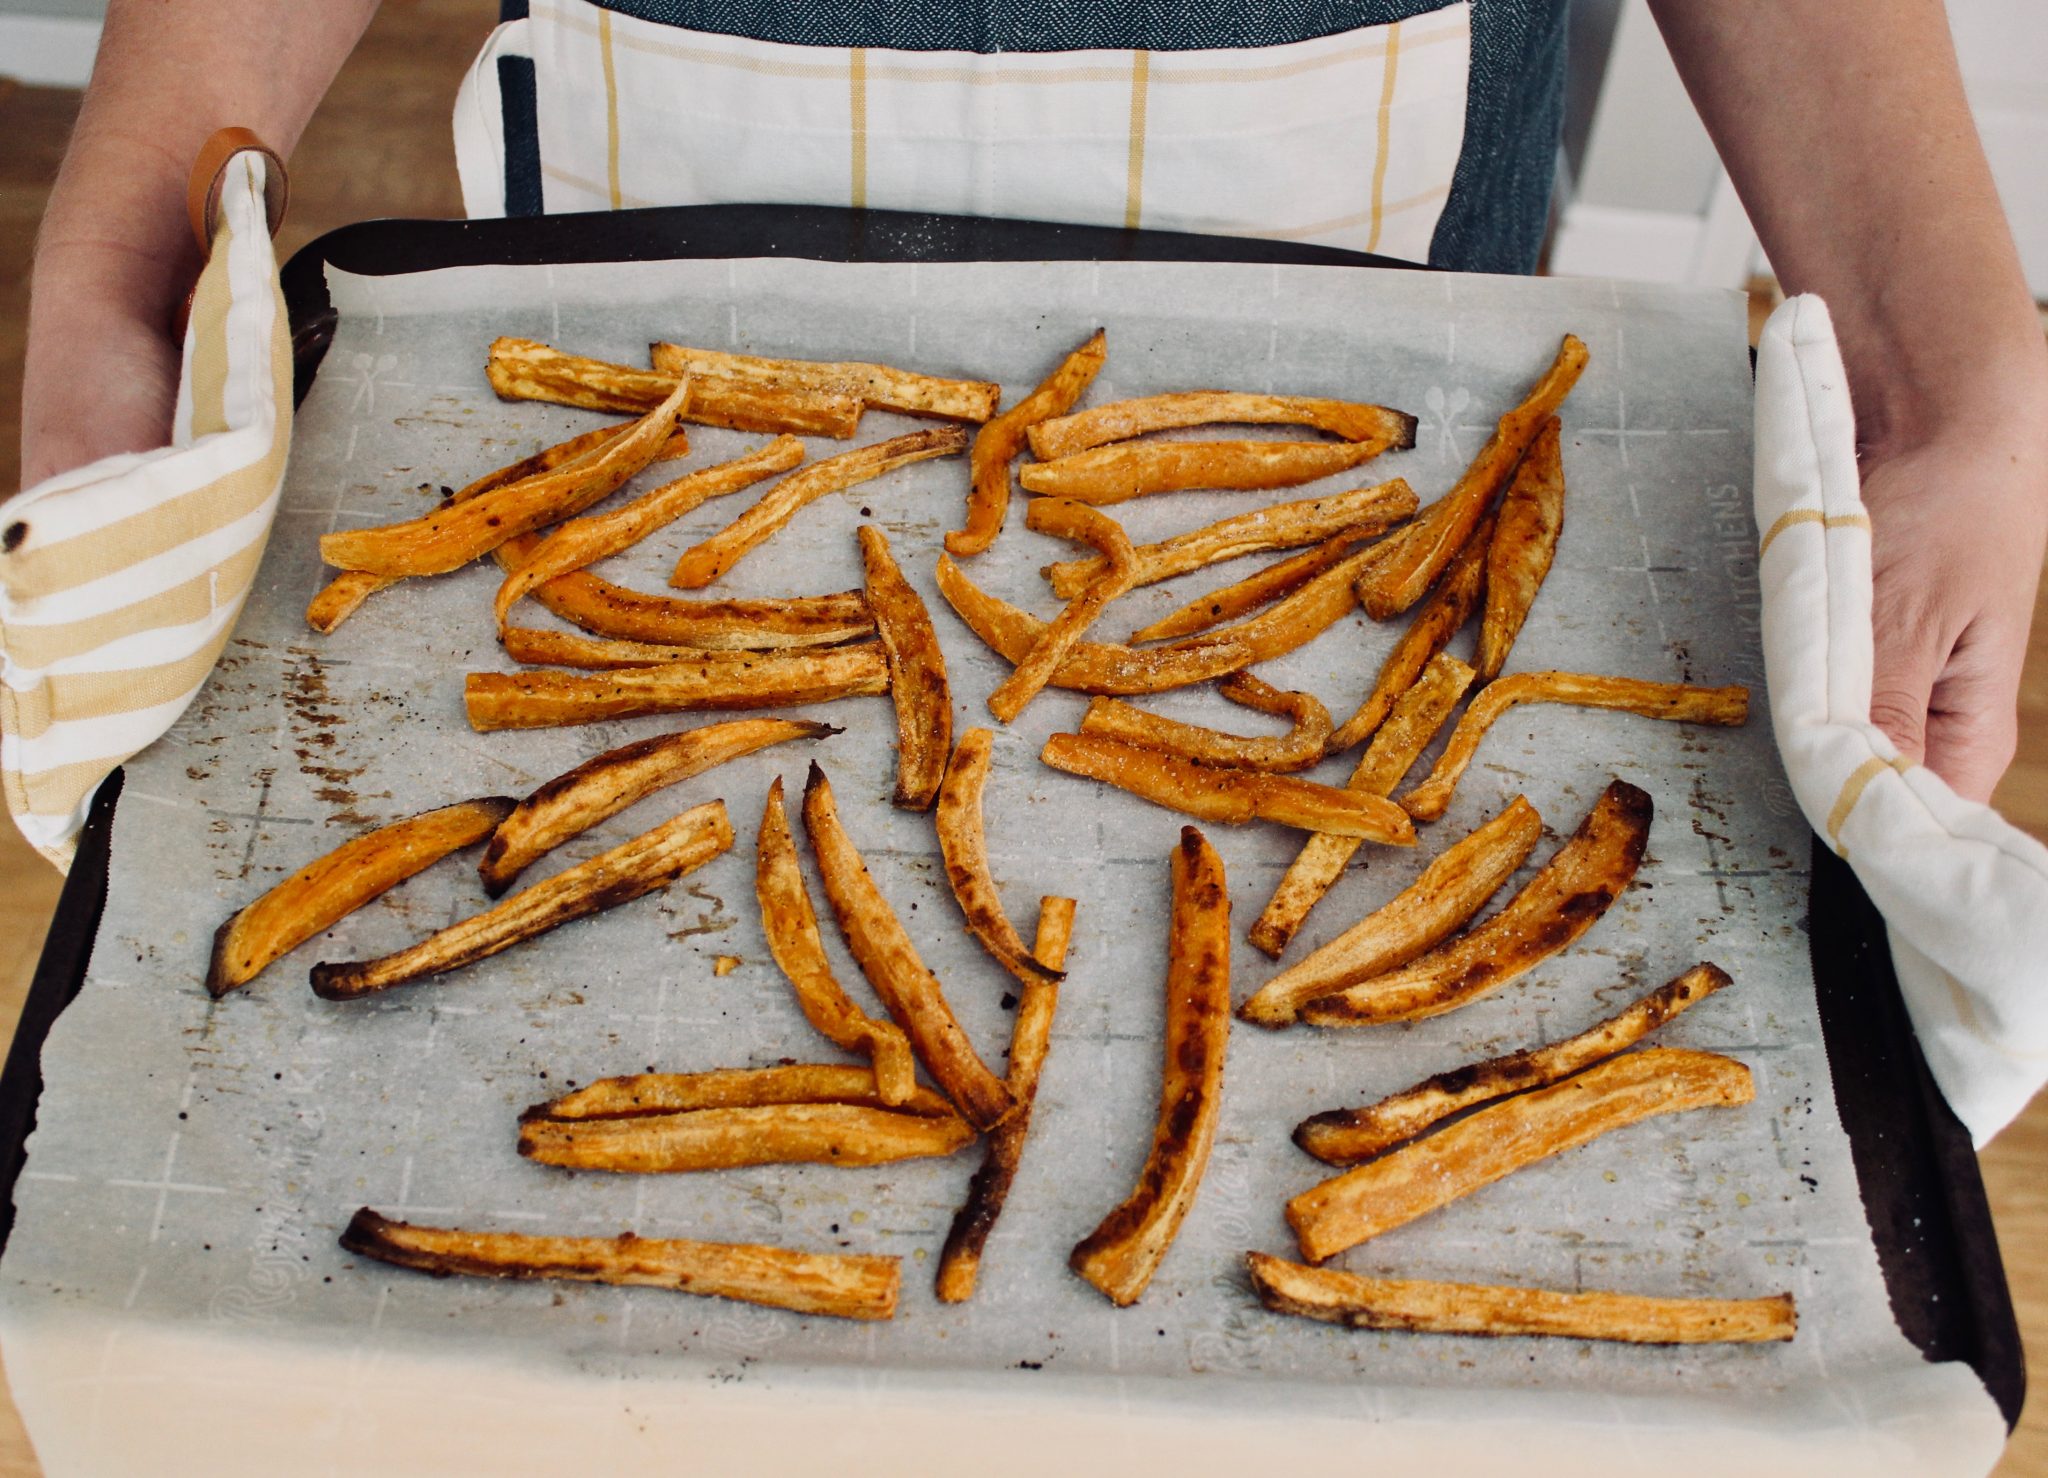 Seasoned Baked Sweet Potato Fries. - The Pretty Bee